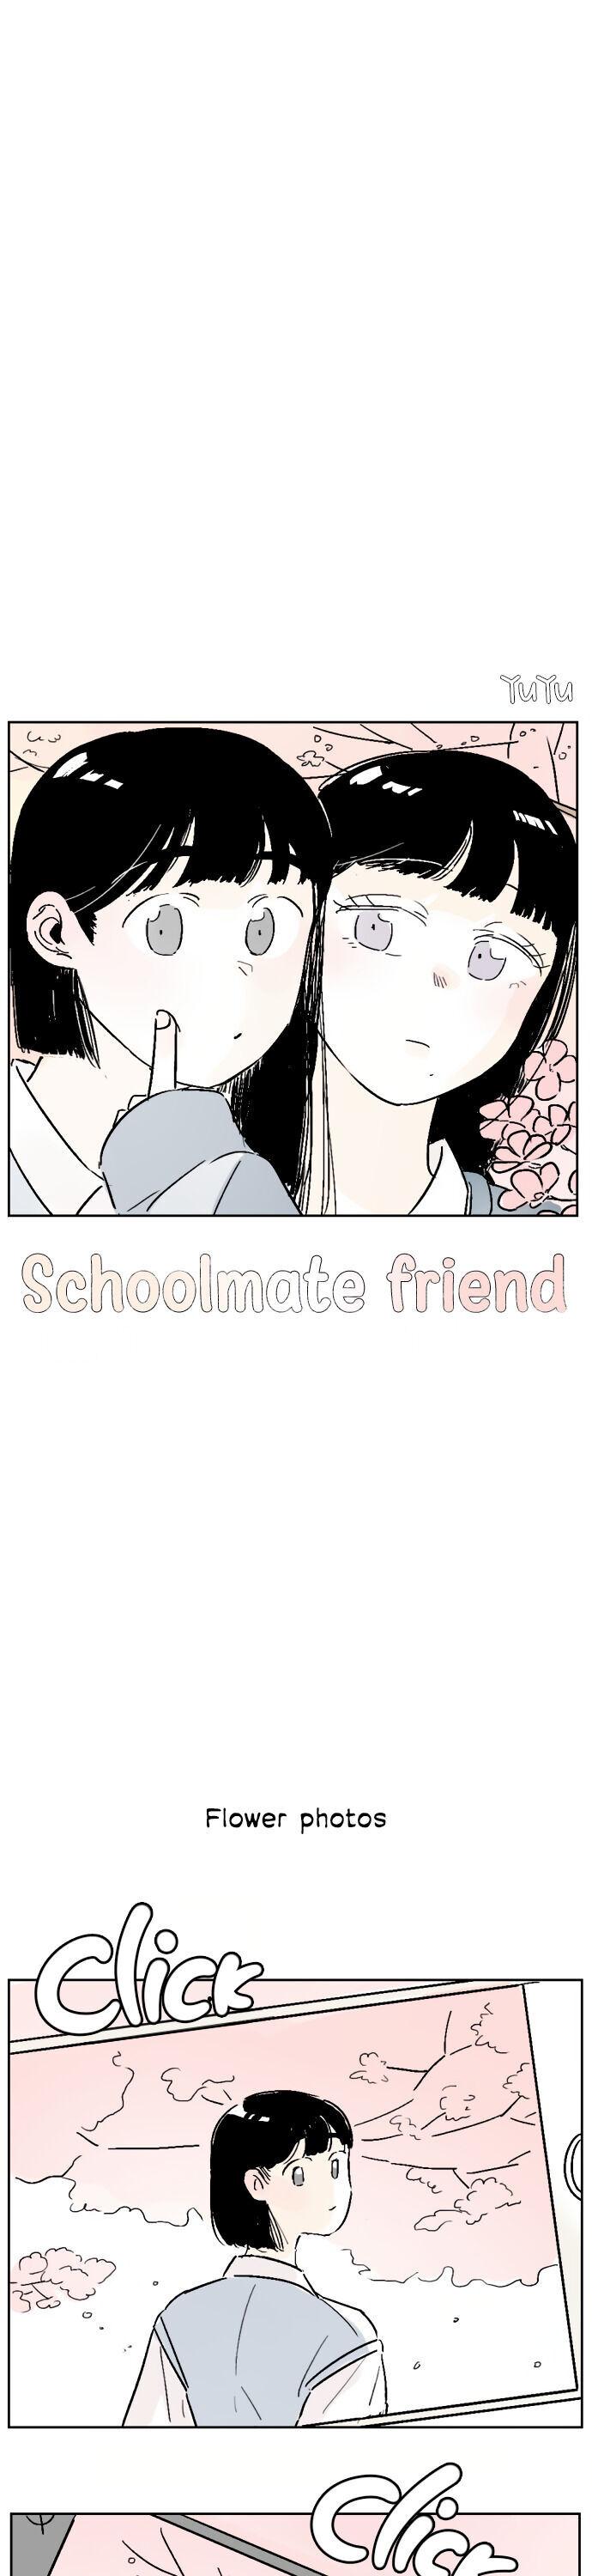 Same School Friend - Page 2